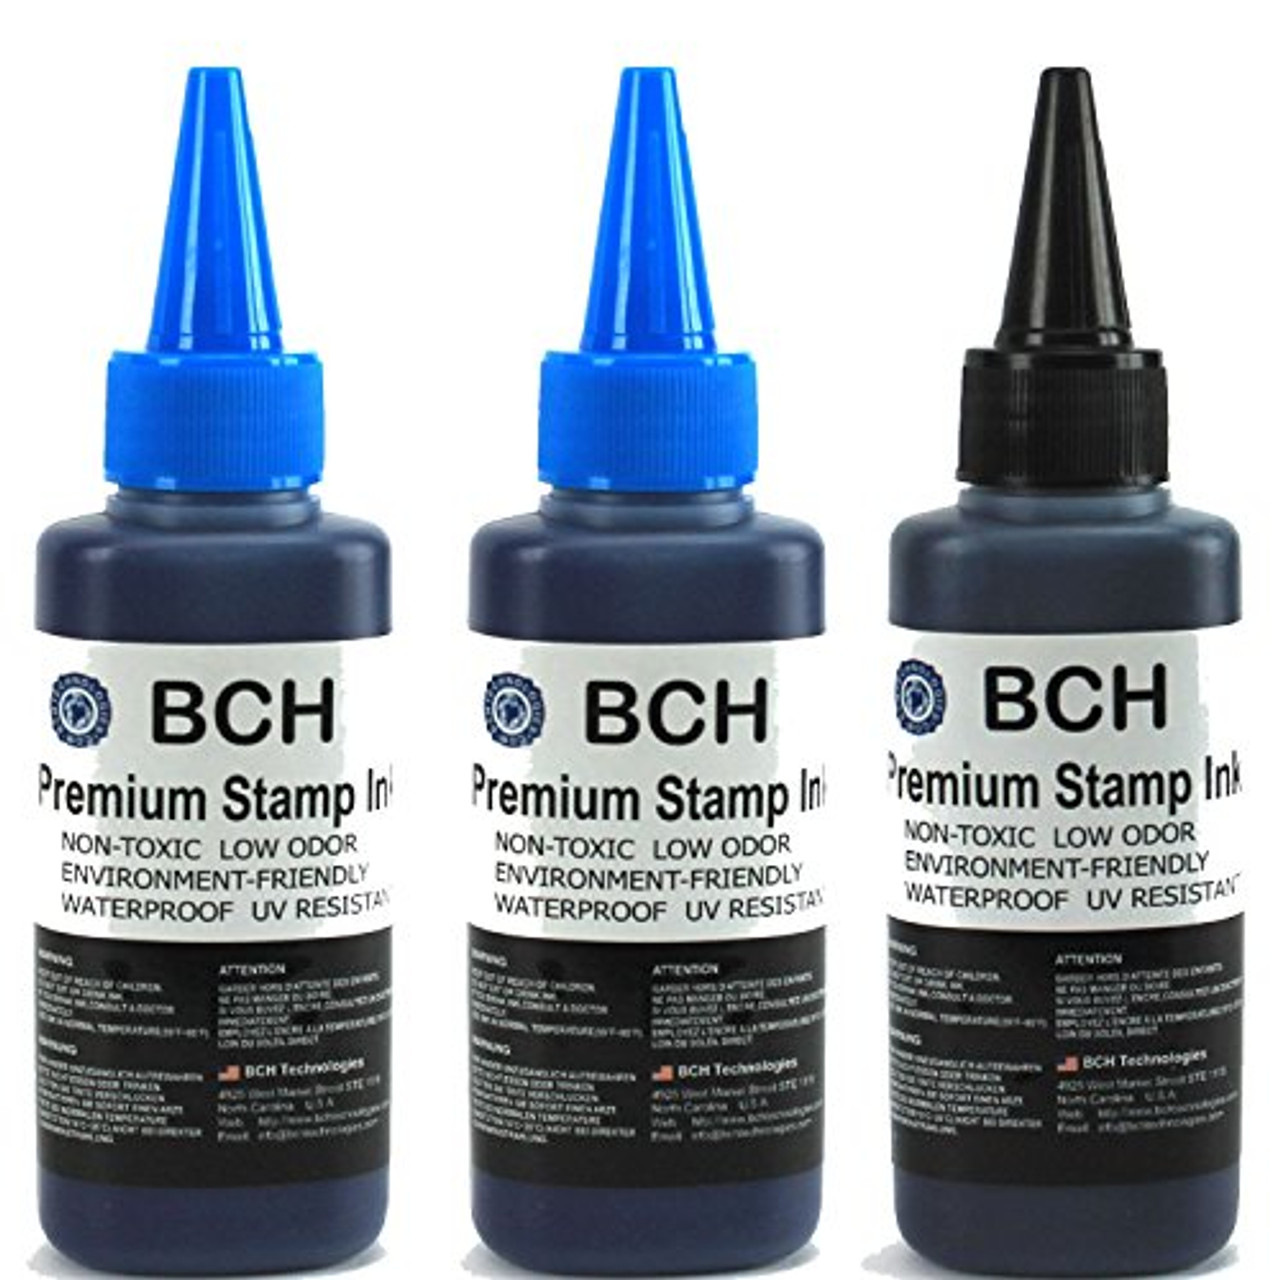 2X Blue + 1X Black Stamp Ink Refill by BCH - Premium Grade -2.5 oz